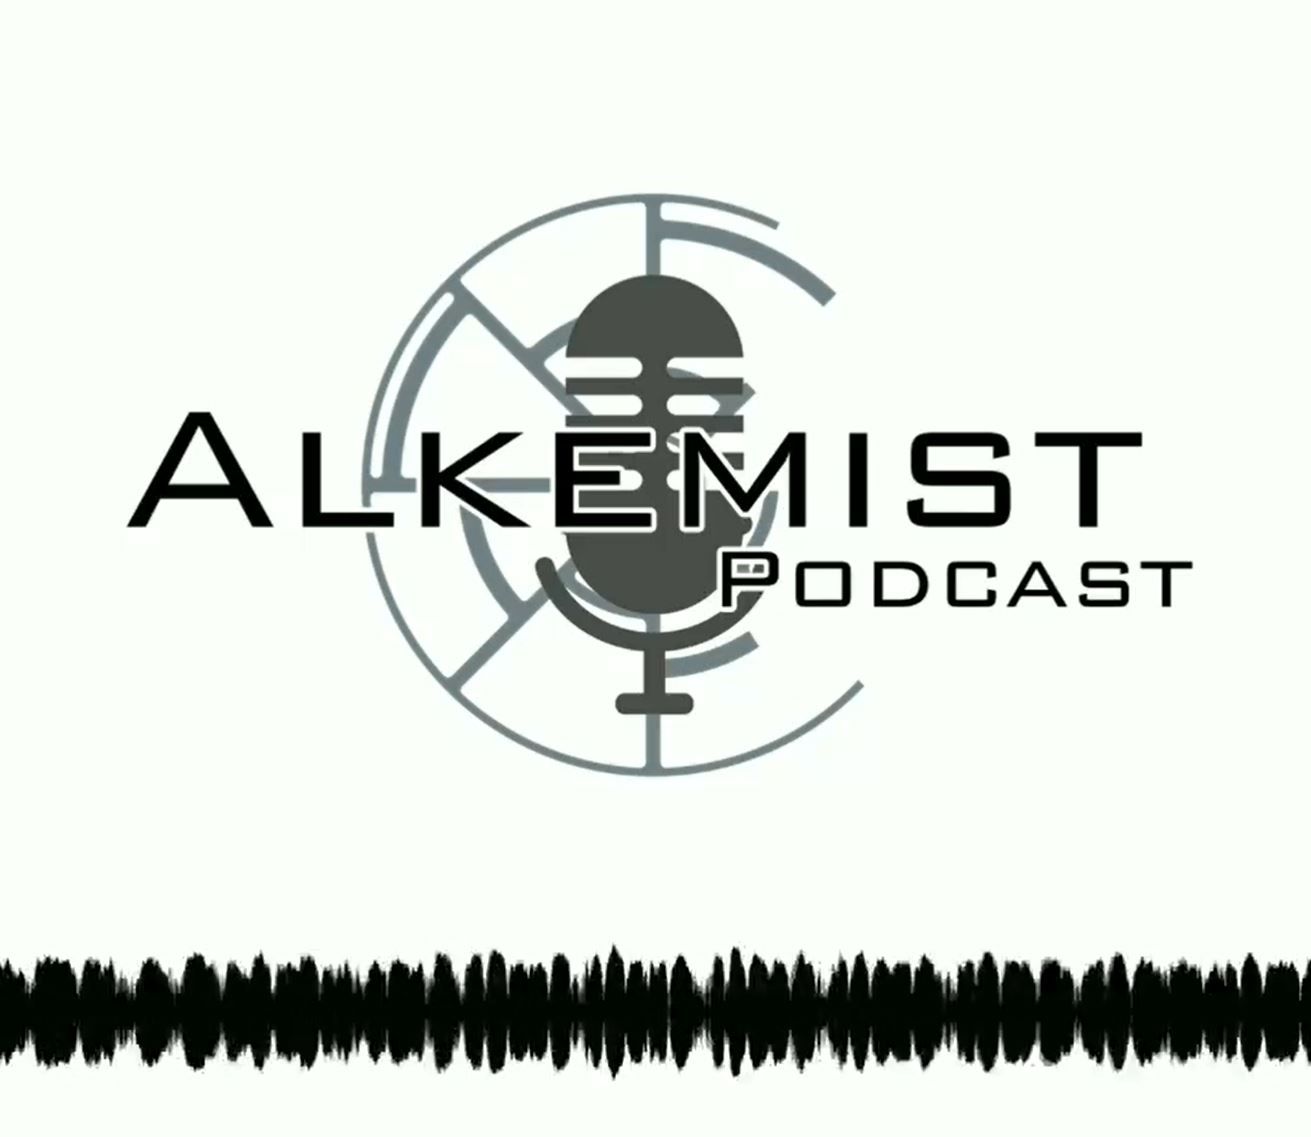 Alkemist, un podcast muy singular